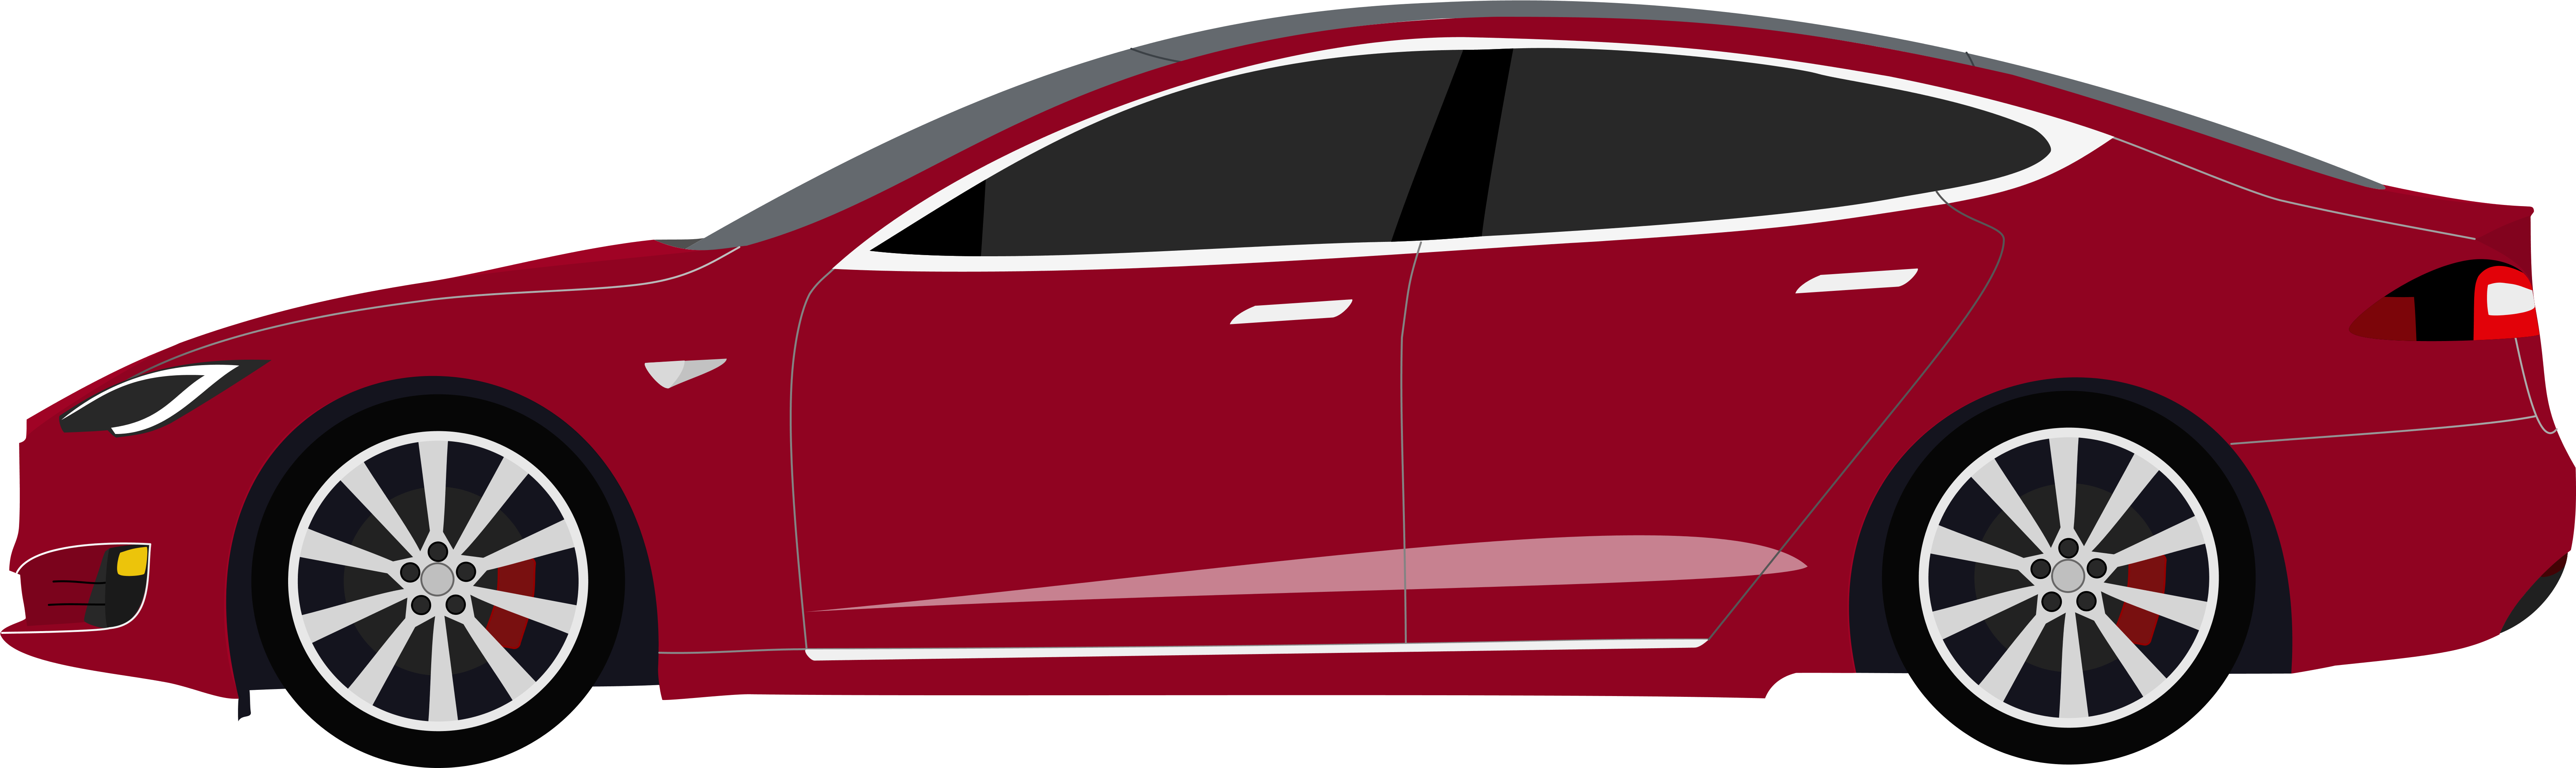 Download PNG image - Red Tesla Car PNG Pic 